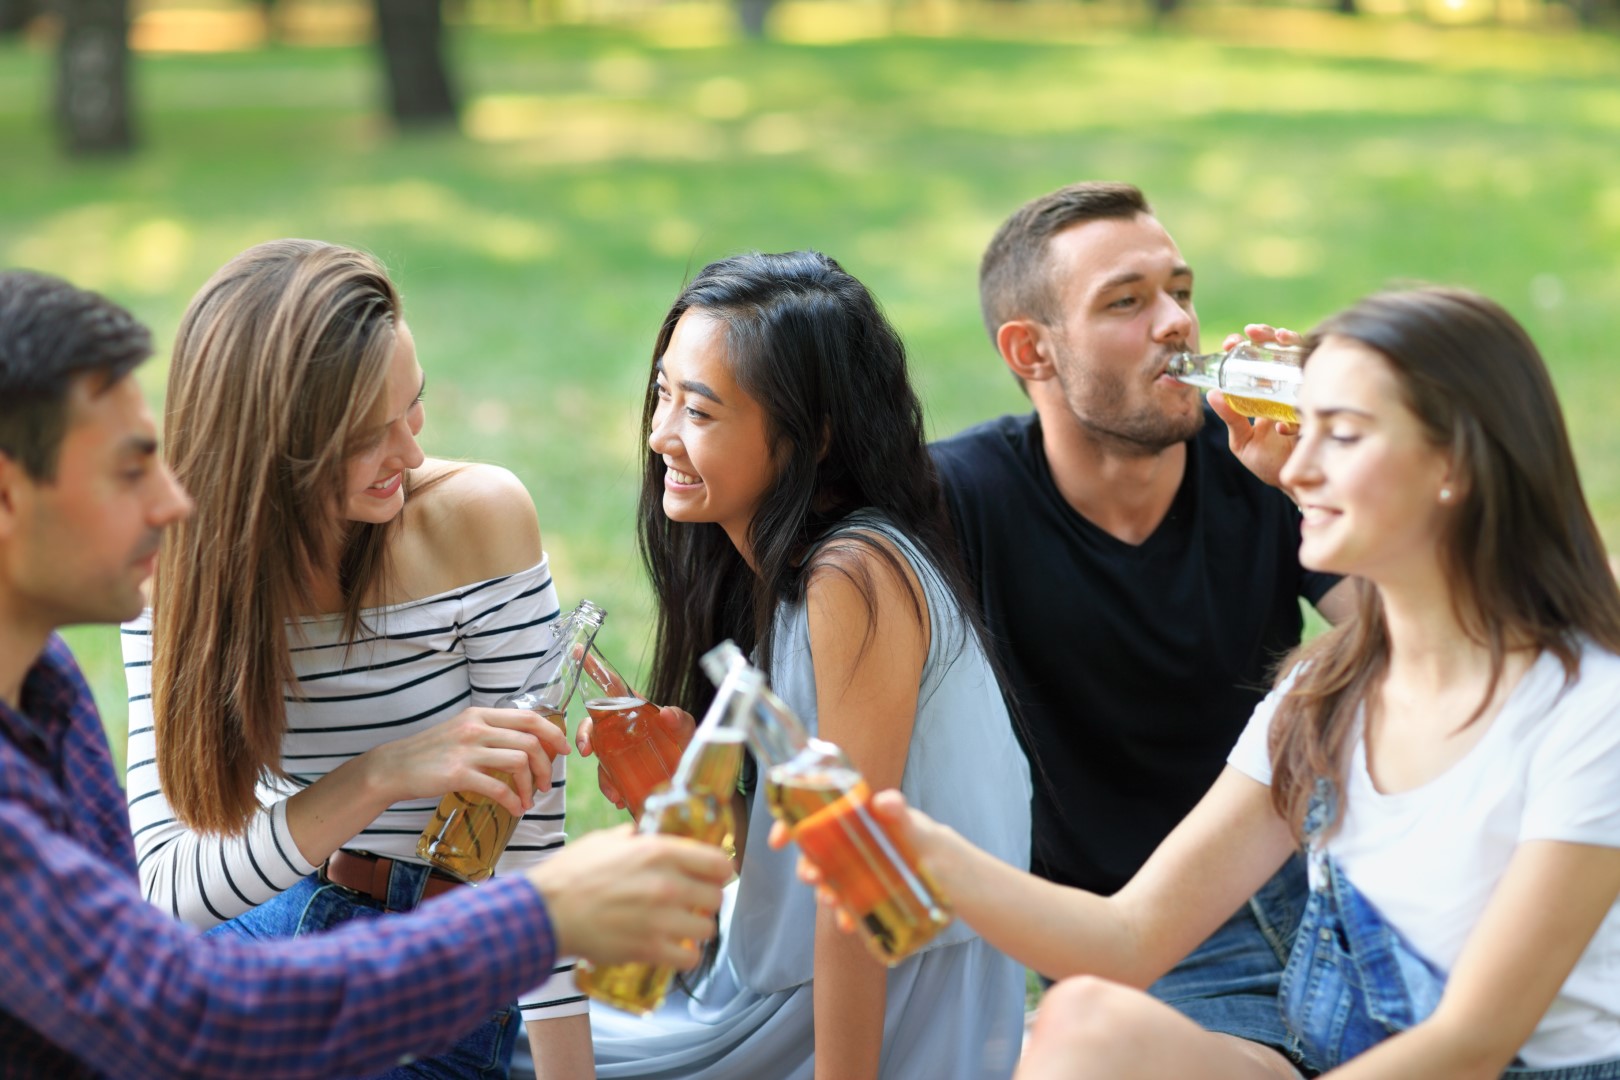 Summer trend alert: Mild alcoholism